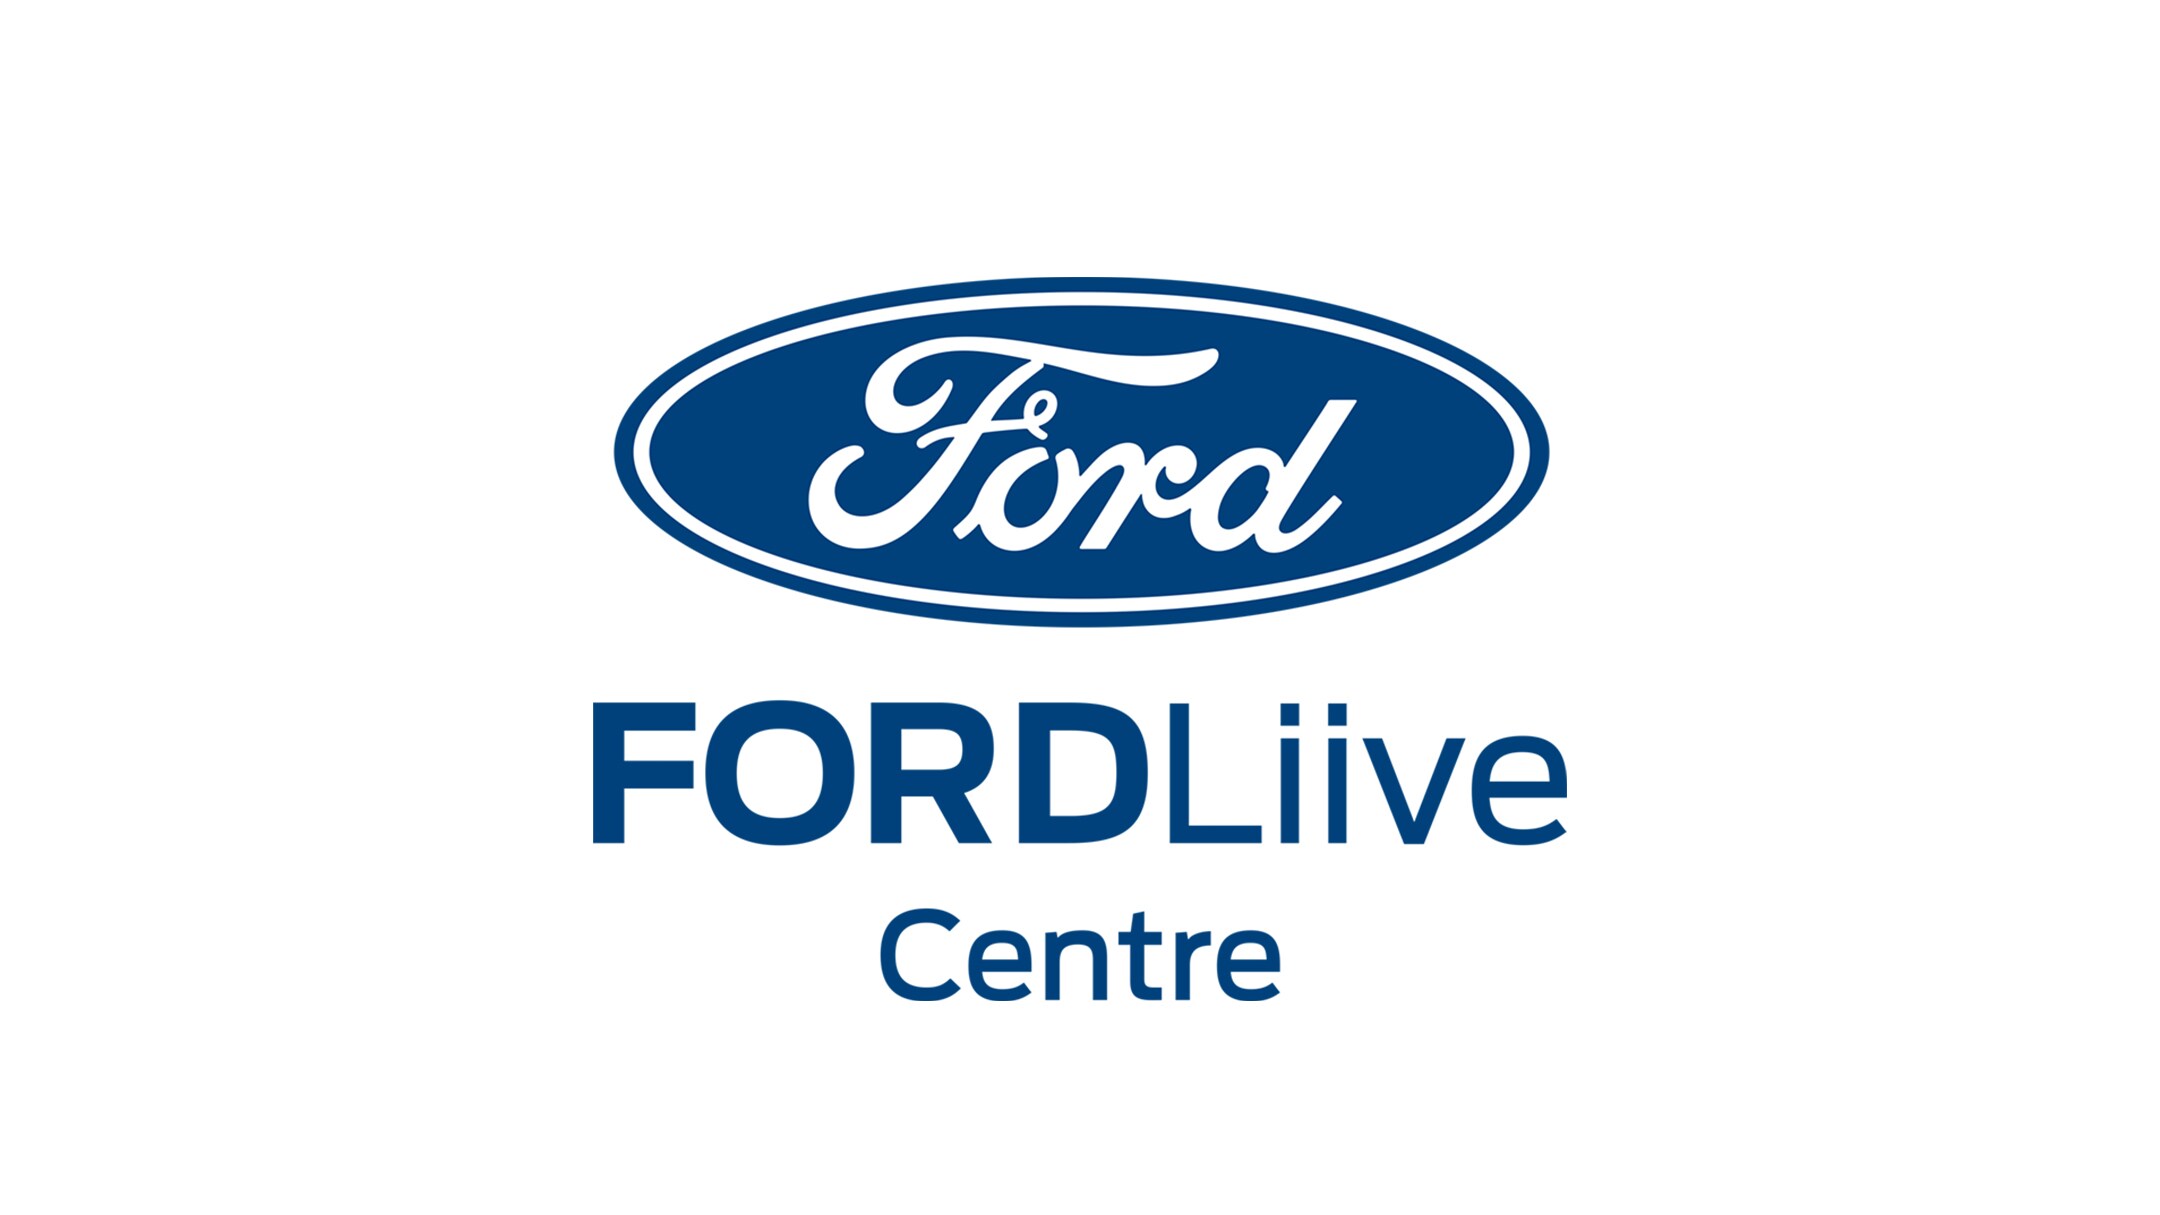 Ford Liive Centre